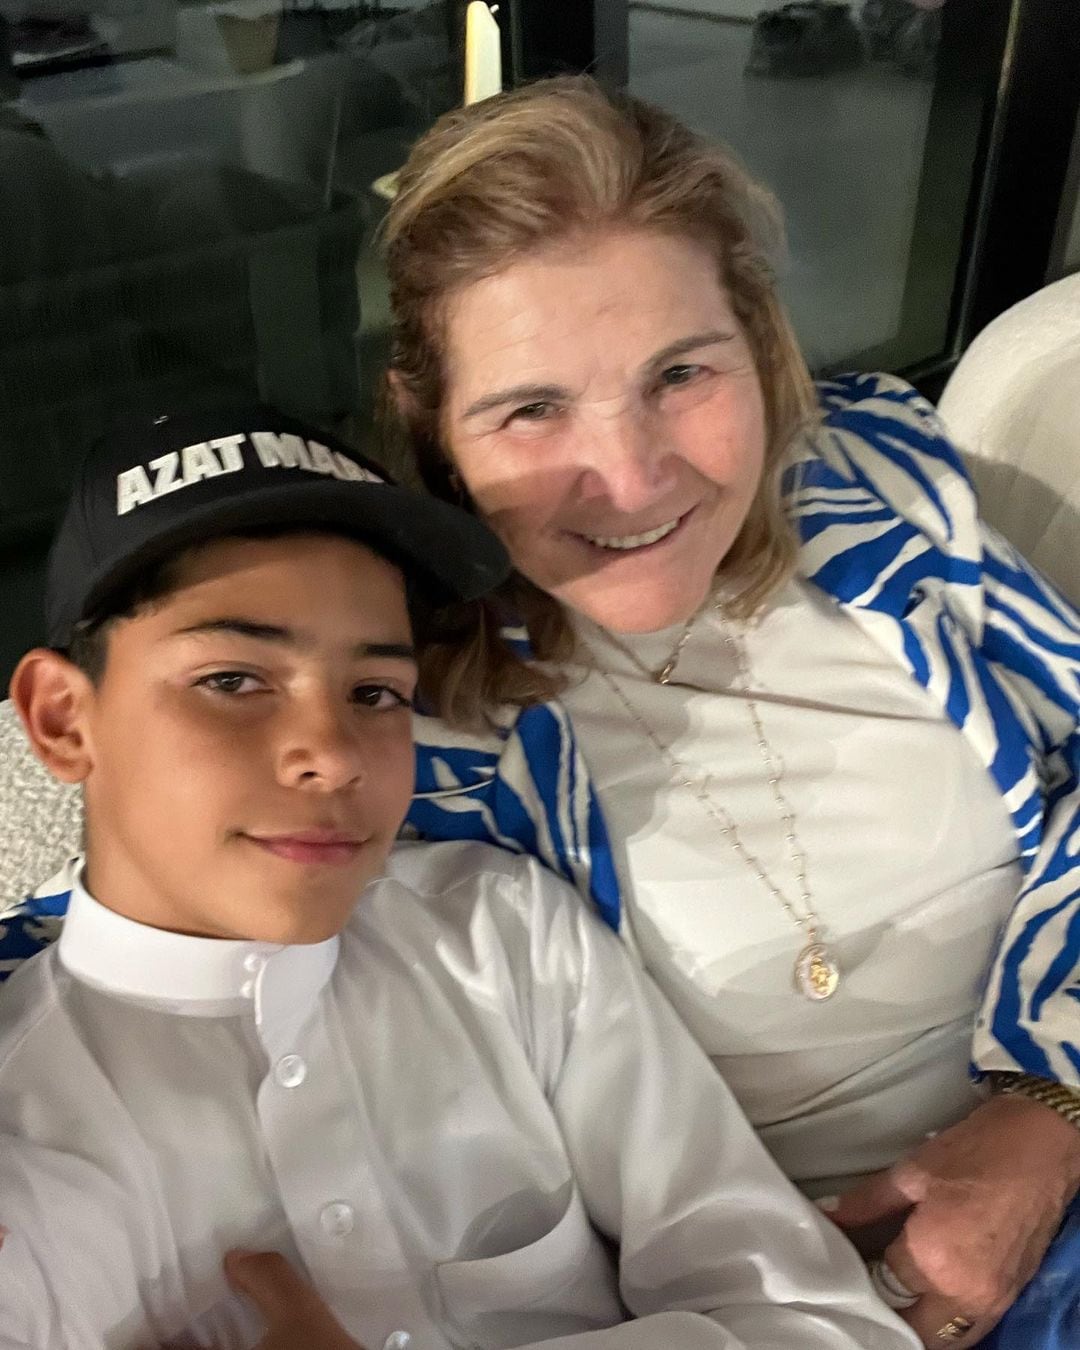 Cristiano Ronaldo's son wears thobe in selfie with grandmother